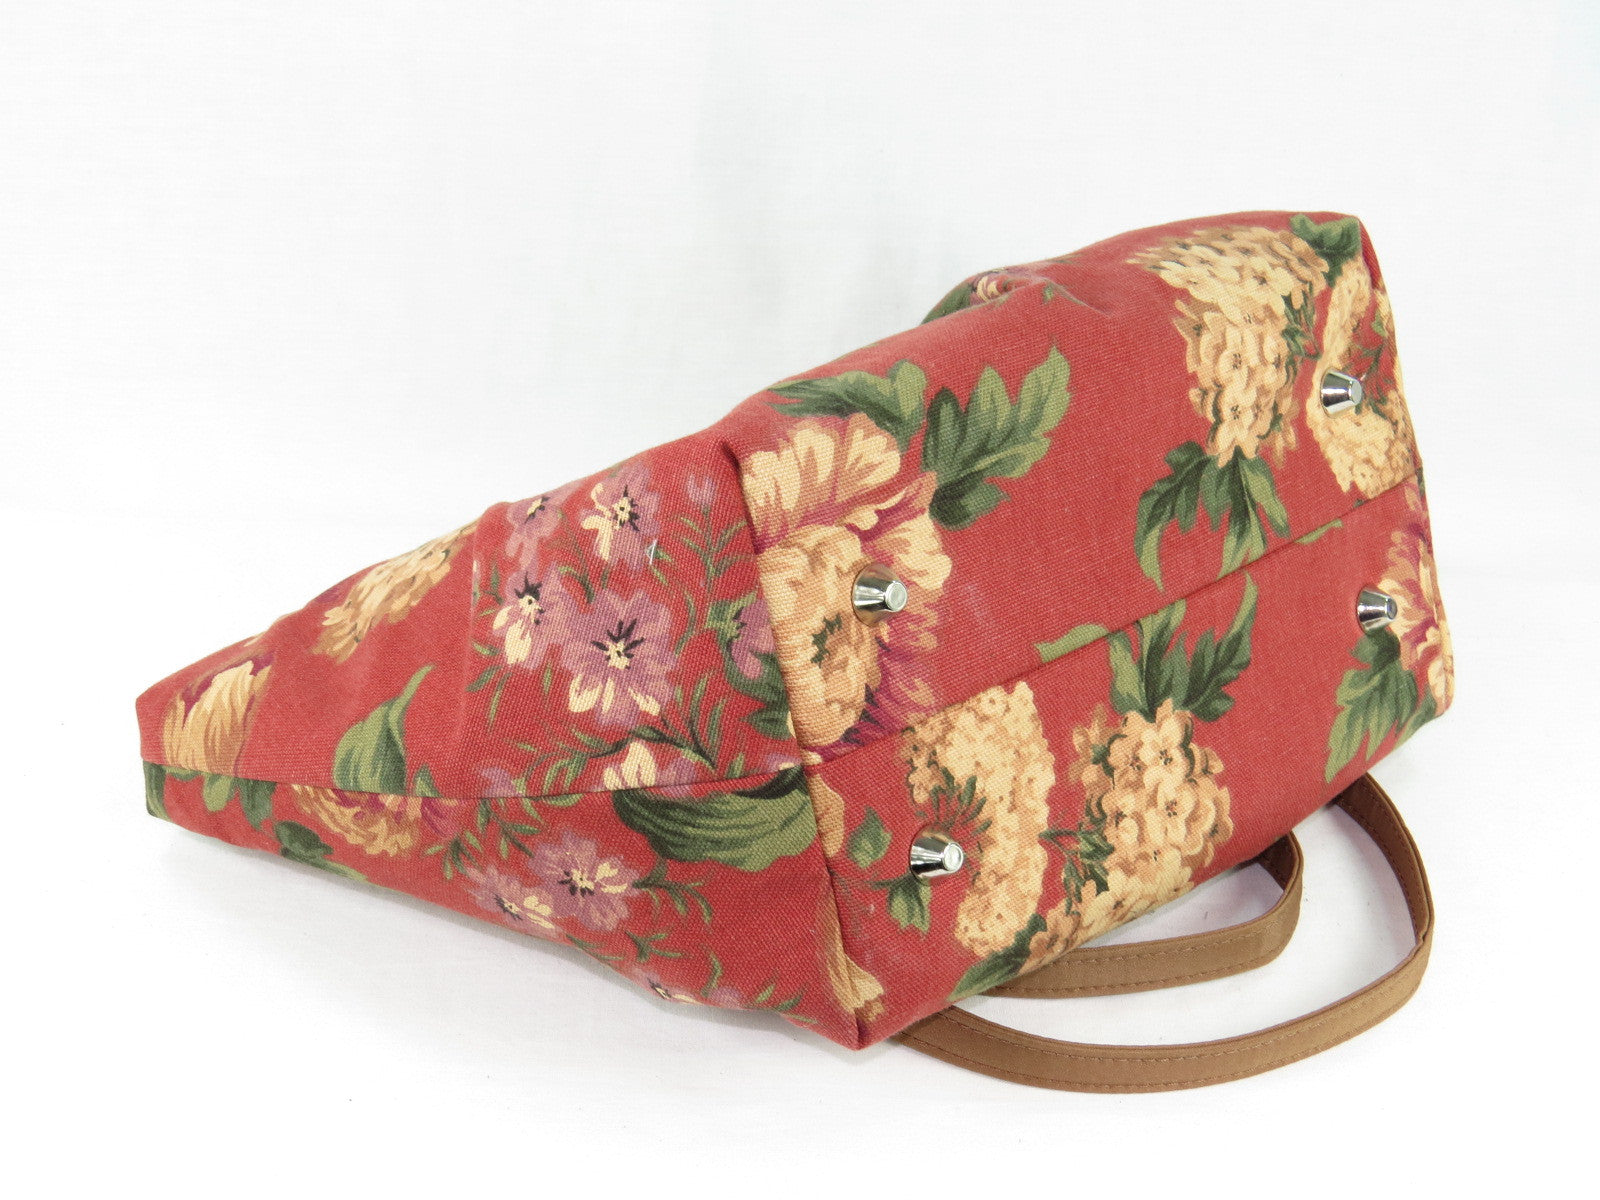 Autumn Floral Print on Canvas Tote Style Handbag bottom view